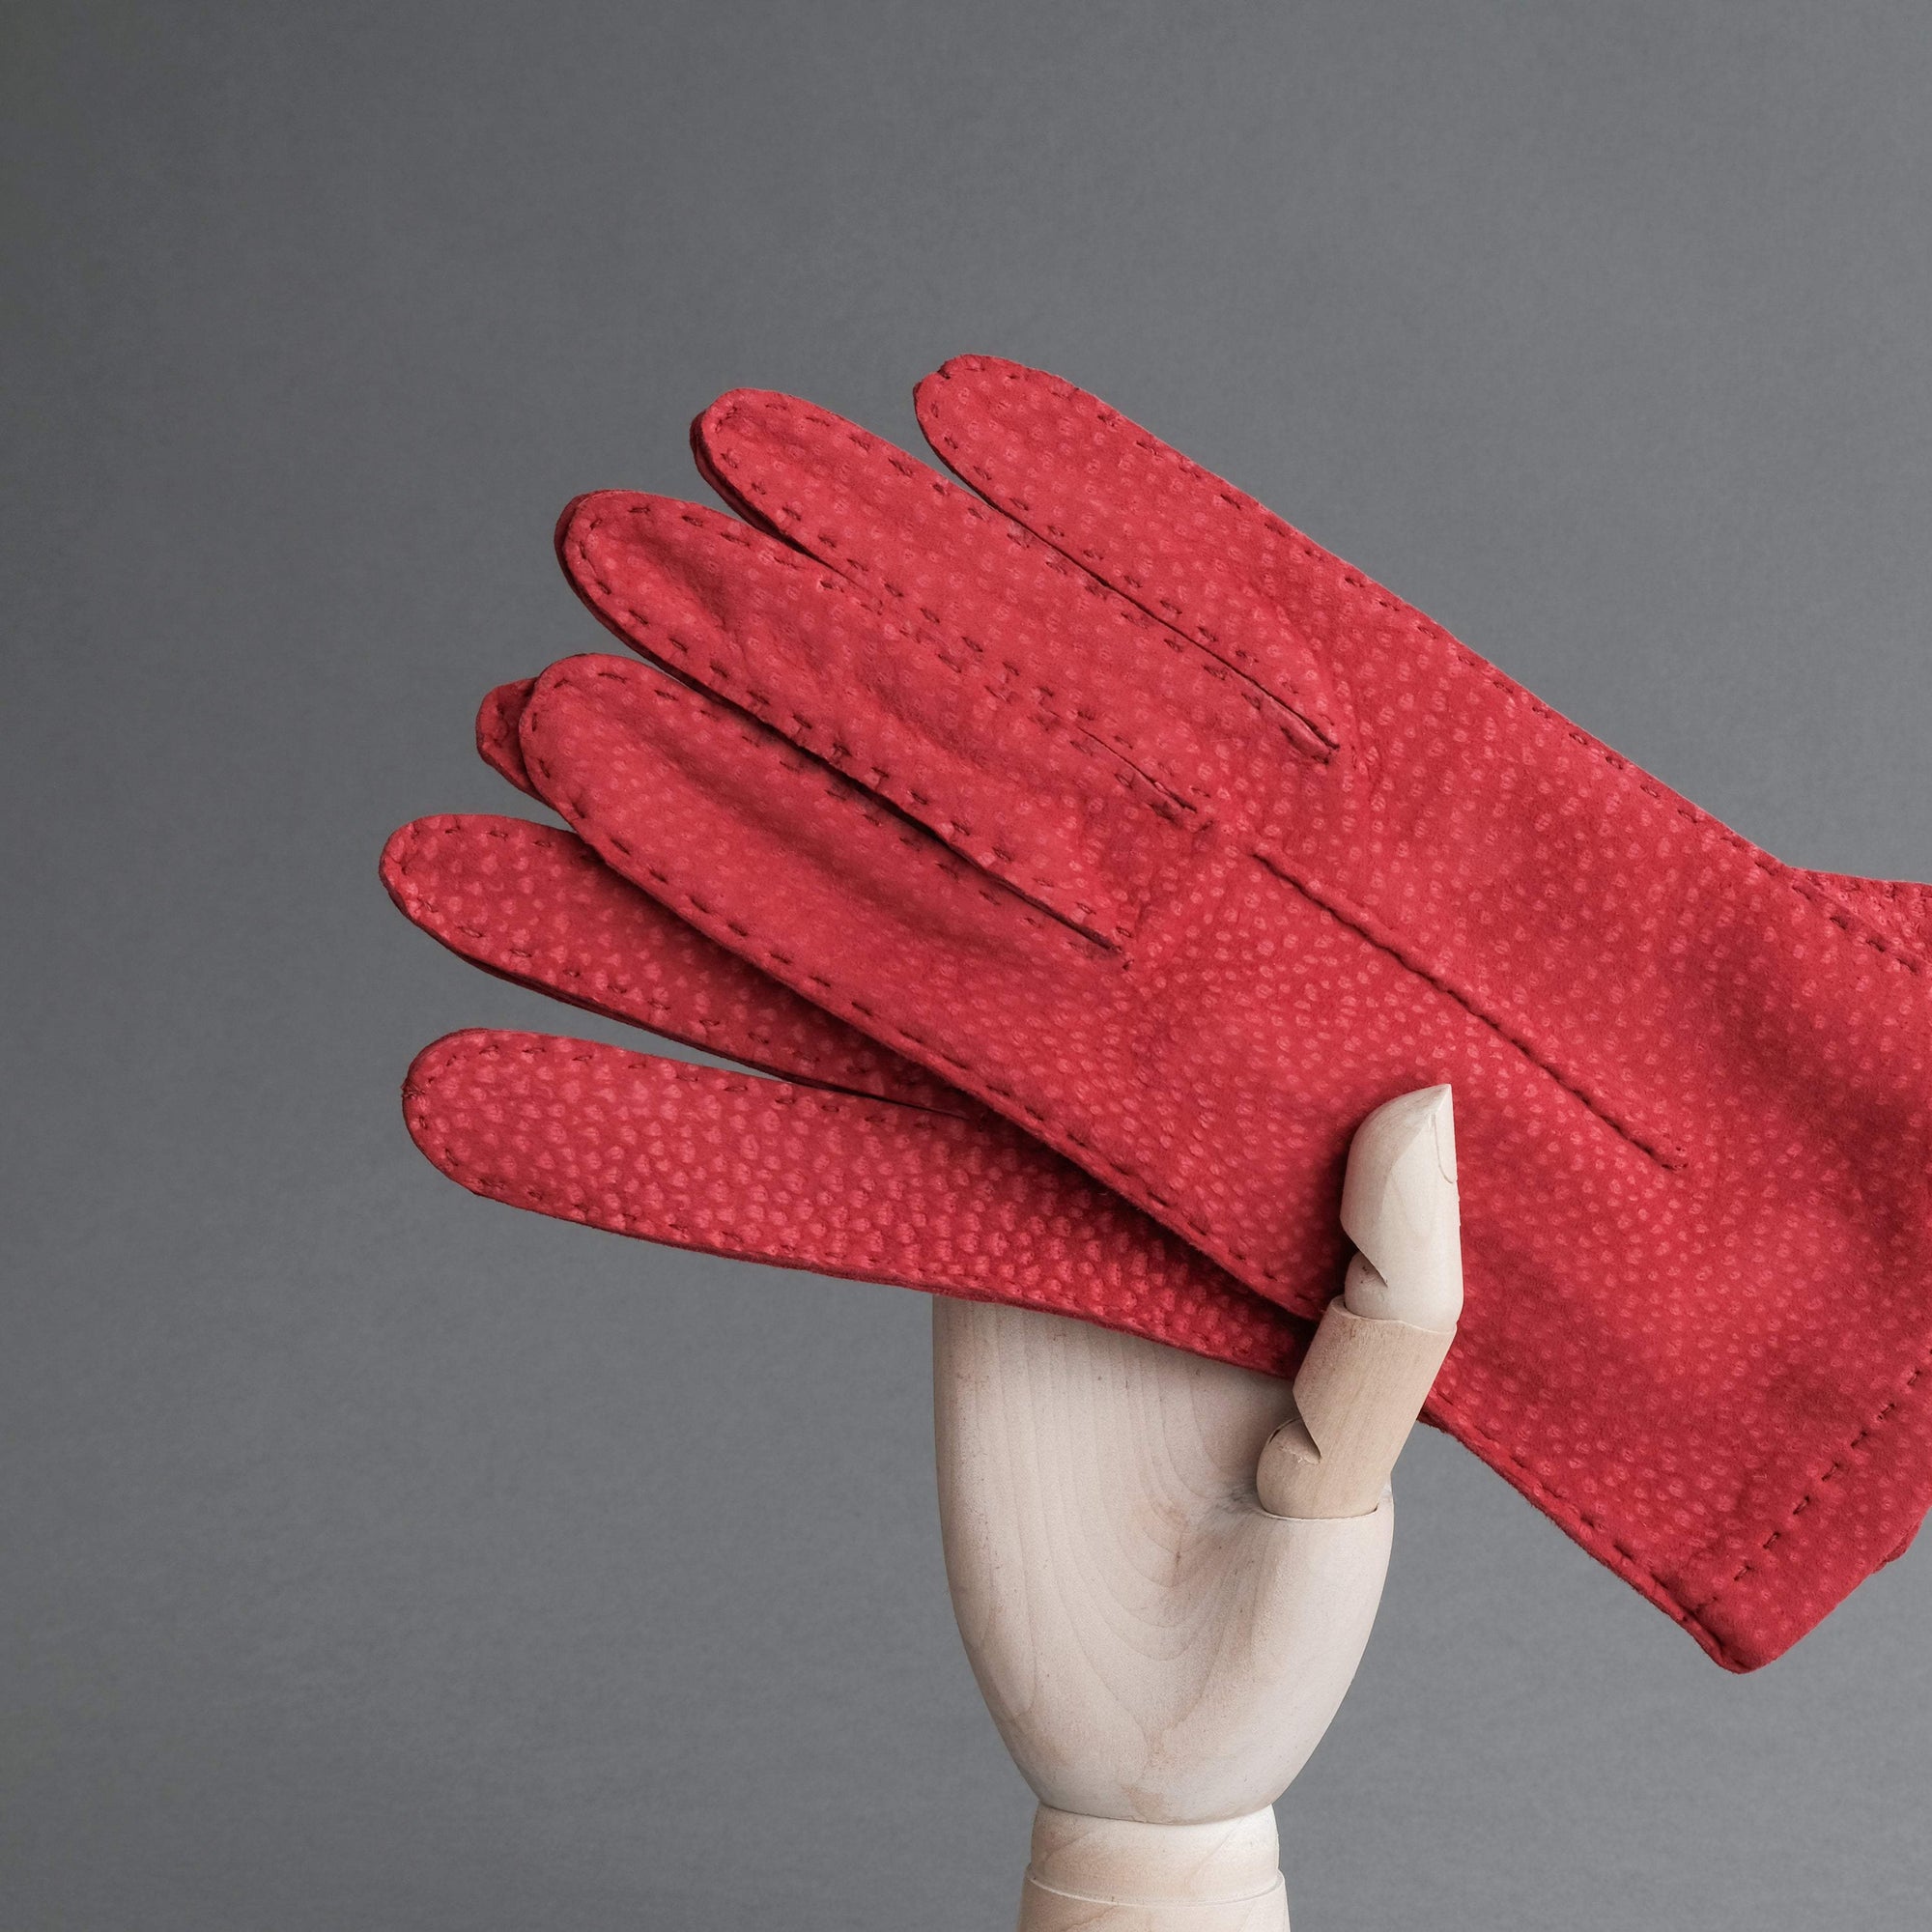 Ladies Dress Gloves from Red Carpincho Leather - TR Handschuhe Wien - Thomas Riemer Handmade Gloves